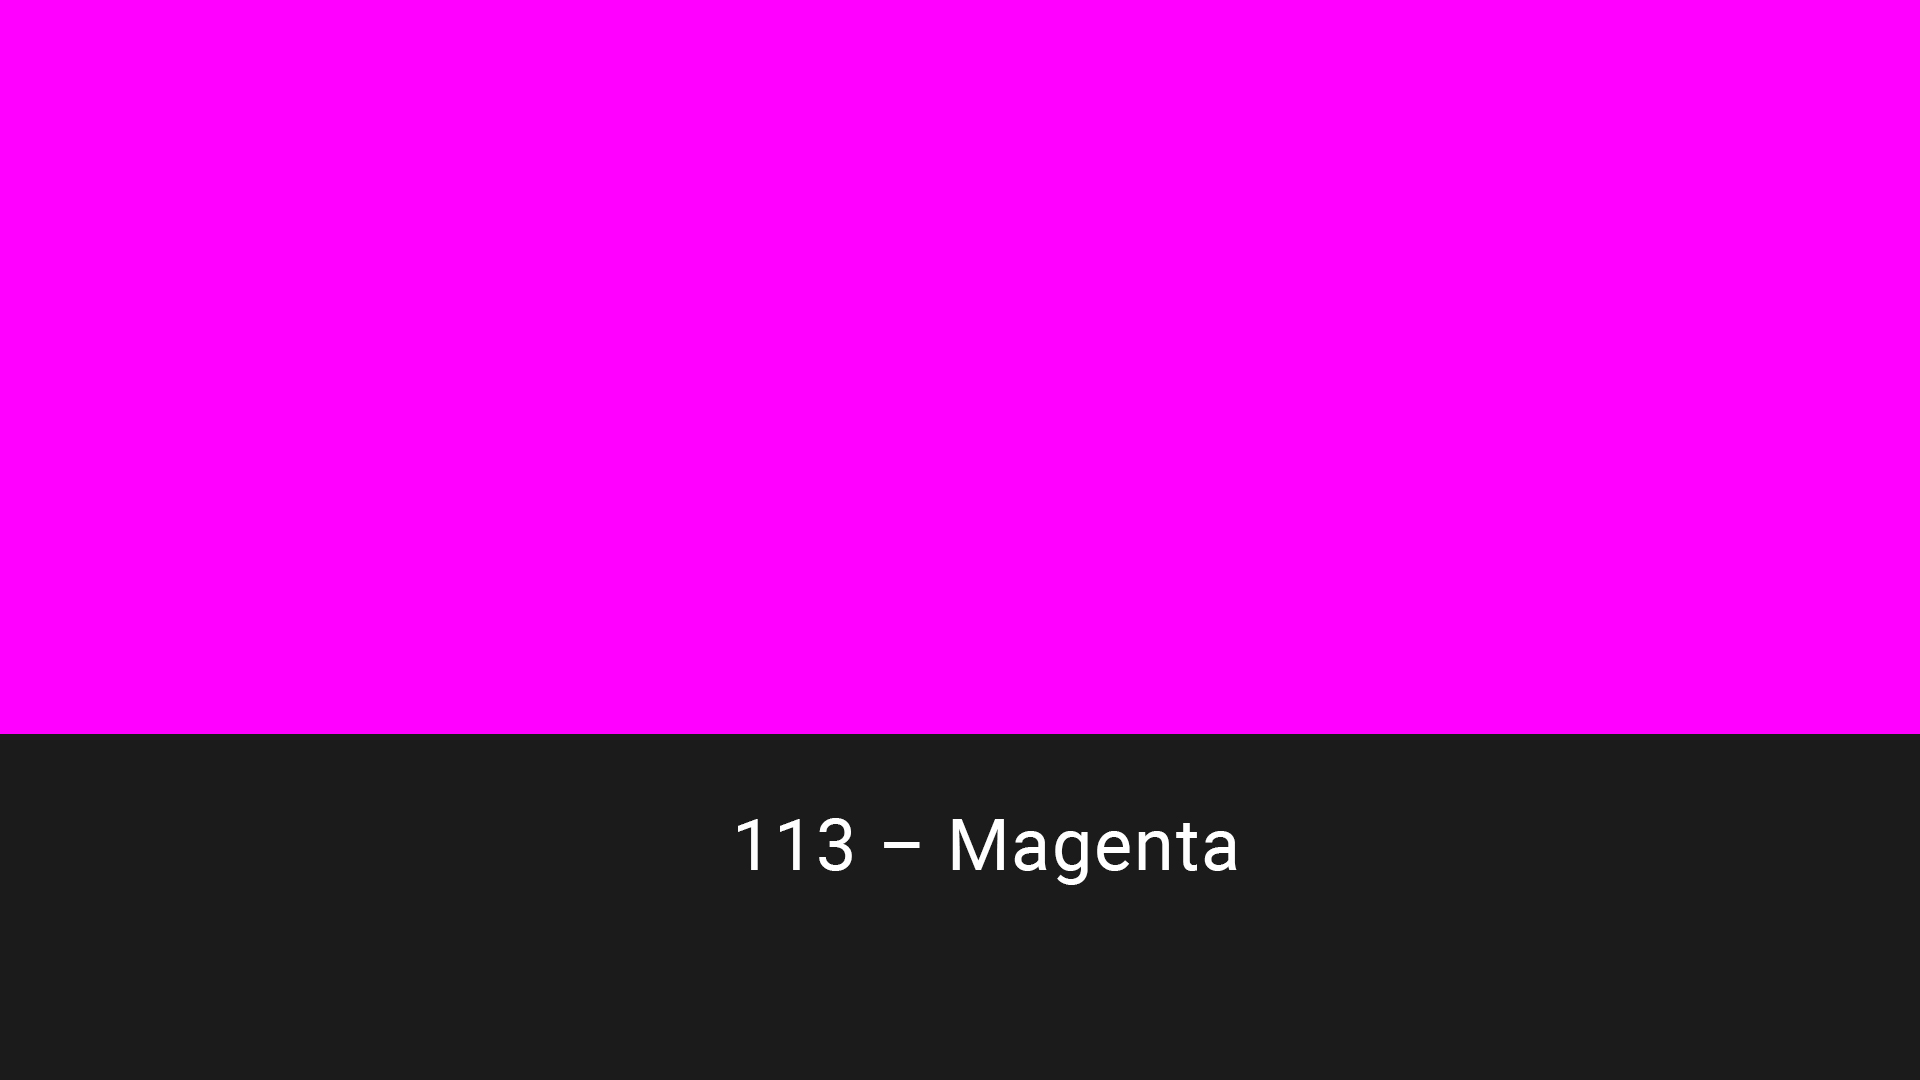 Cotech filters 113 Magenta